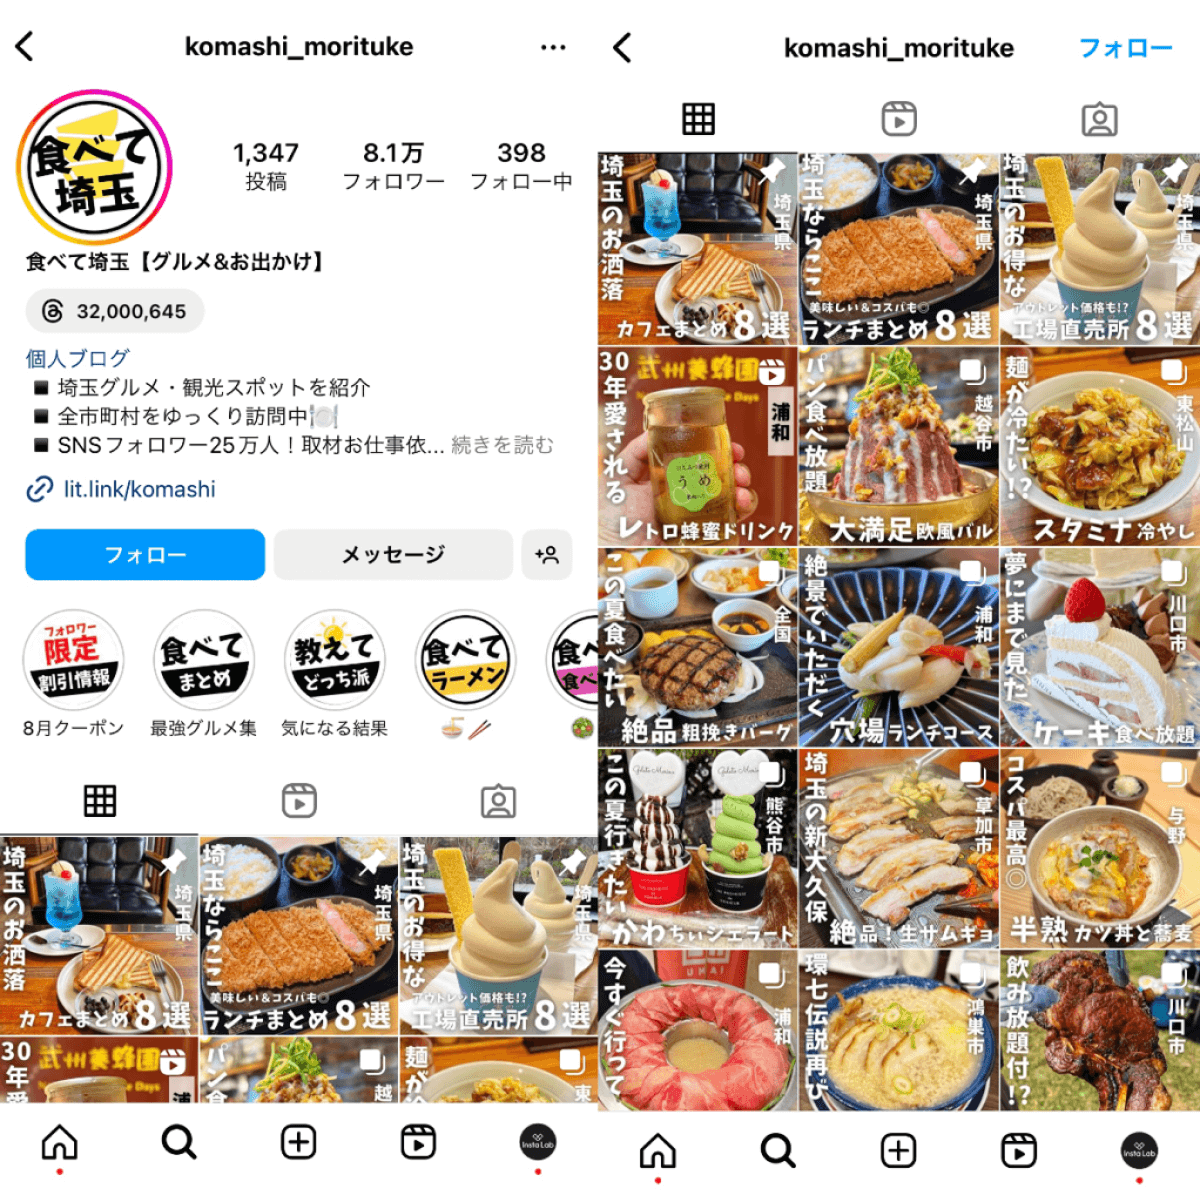 instagram-account-komashi-morituke